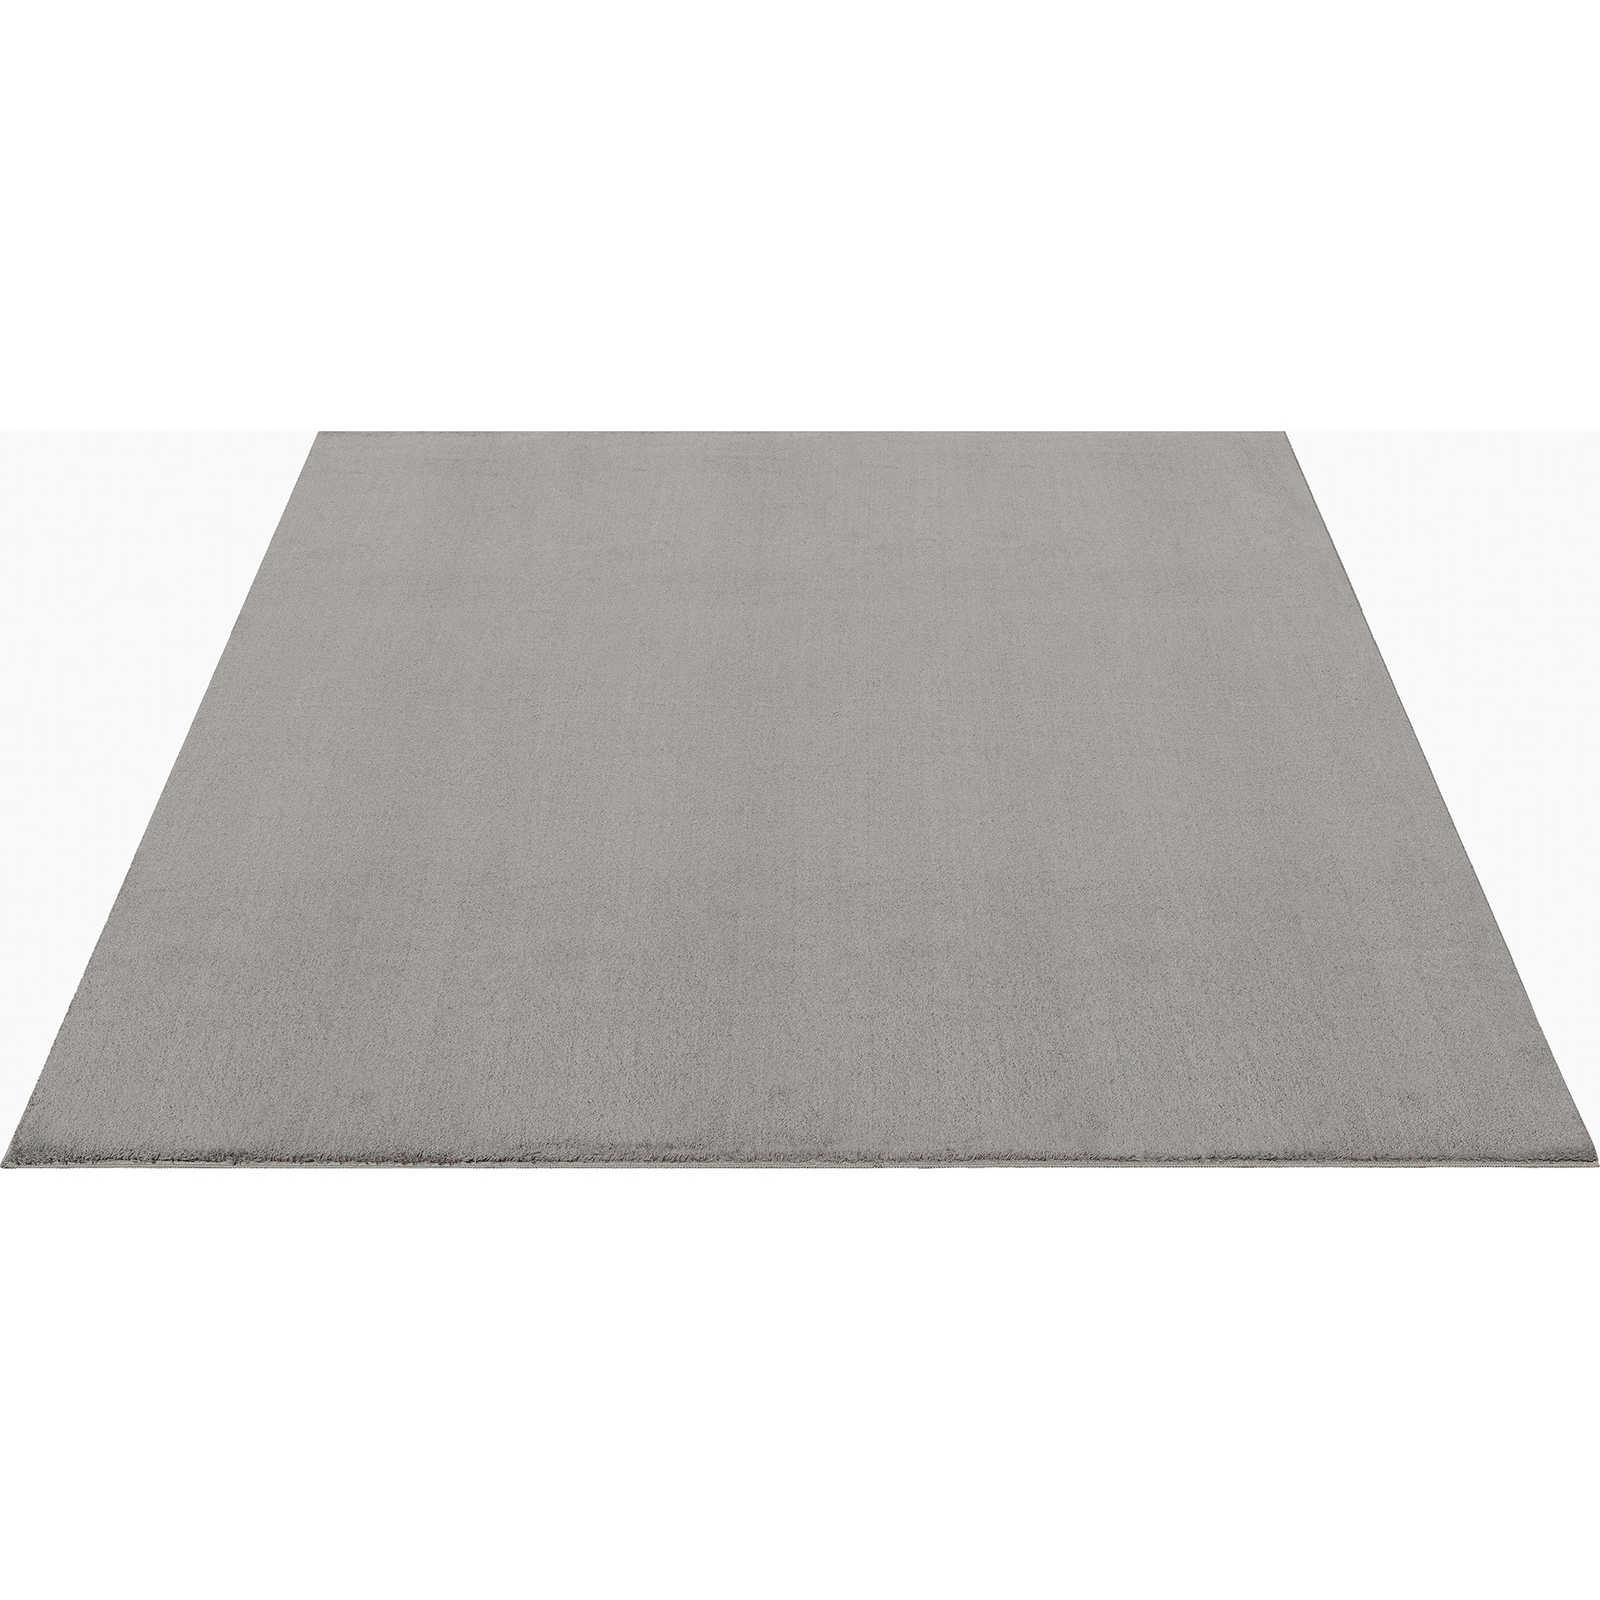 Fashionable high pile carpet in sand - 340 x 240 cm
